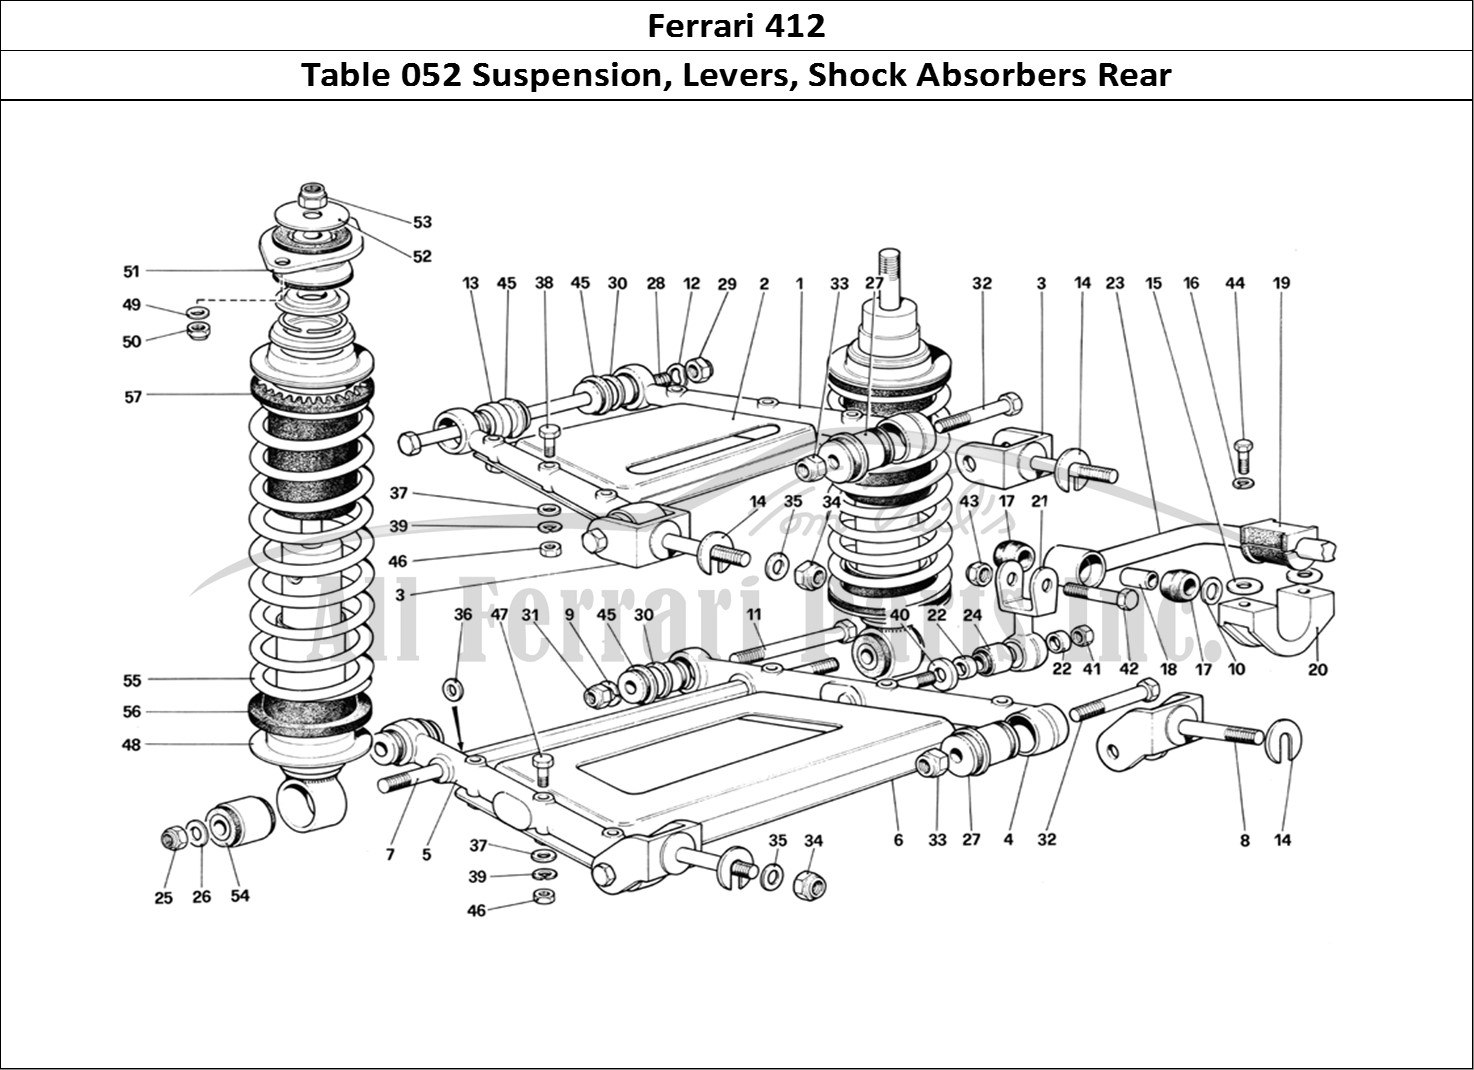 Ferrari Parts Ferrari 412 (Mechanical) Page 052 Rear Suspension - Levers